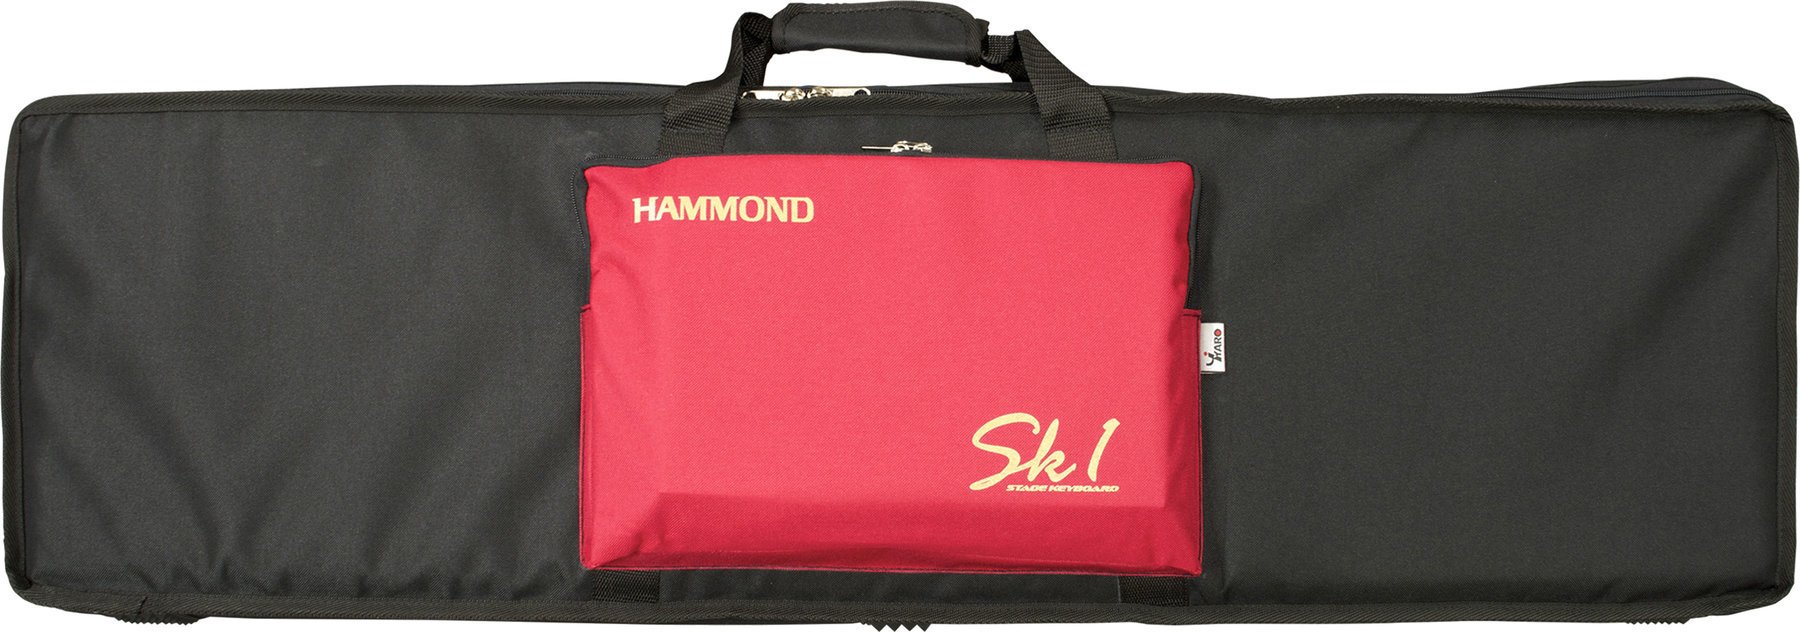 Housse pour clavier Hammond Softbag SK1-73